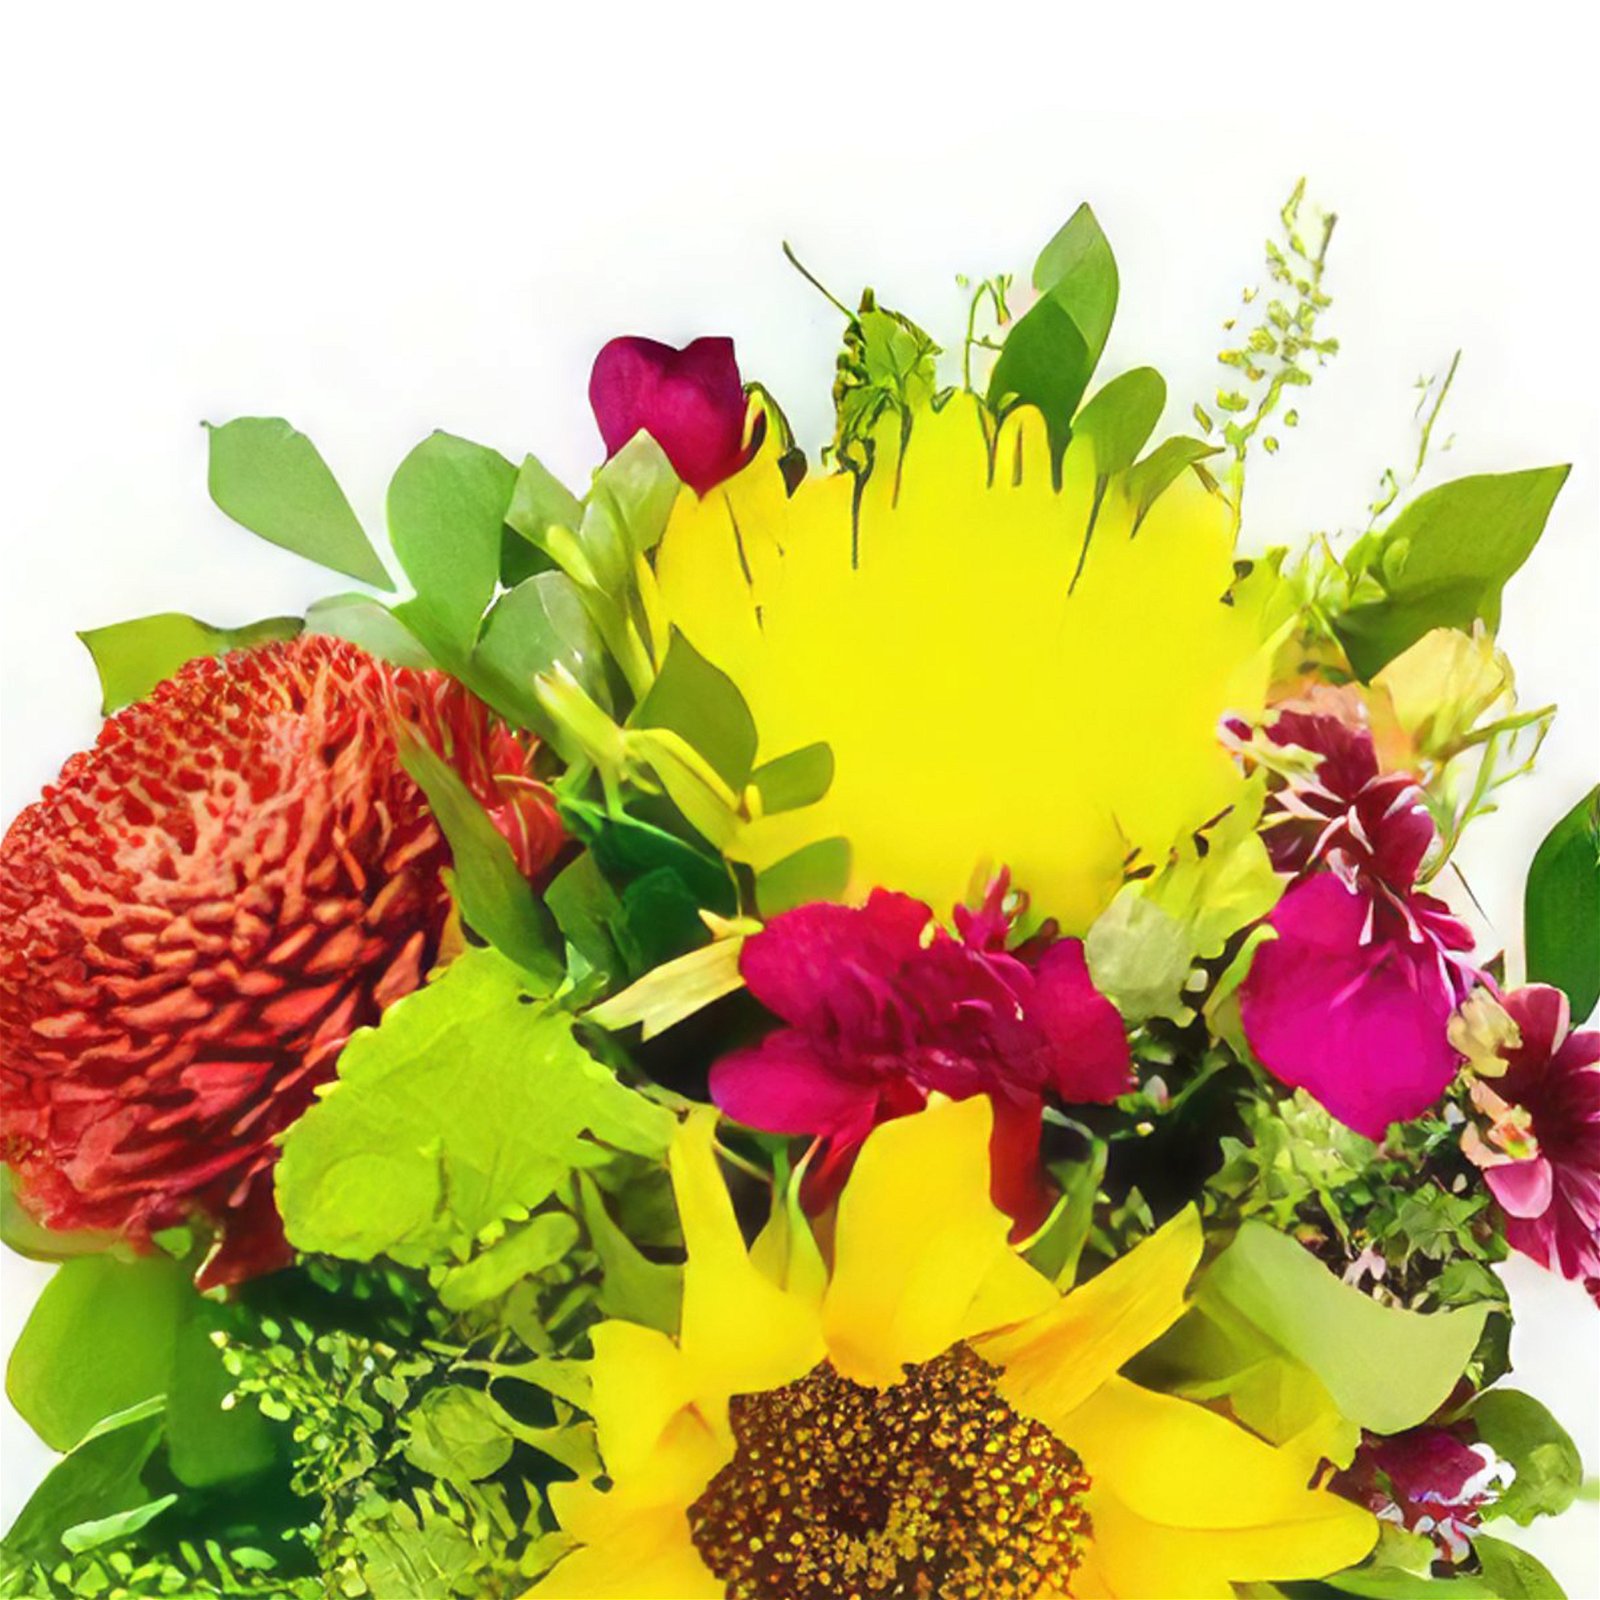 flores Rene Fraga floristeria -  Amor de primavera Ramo de flores/arreglo floral